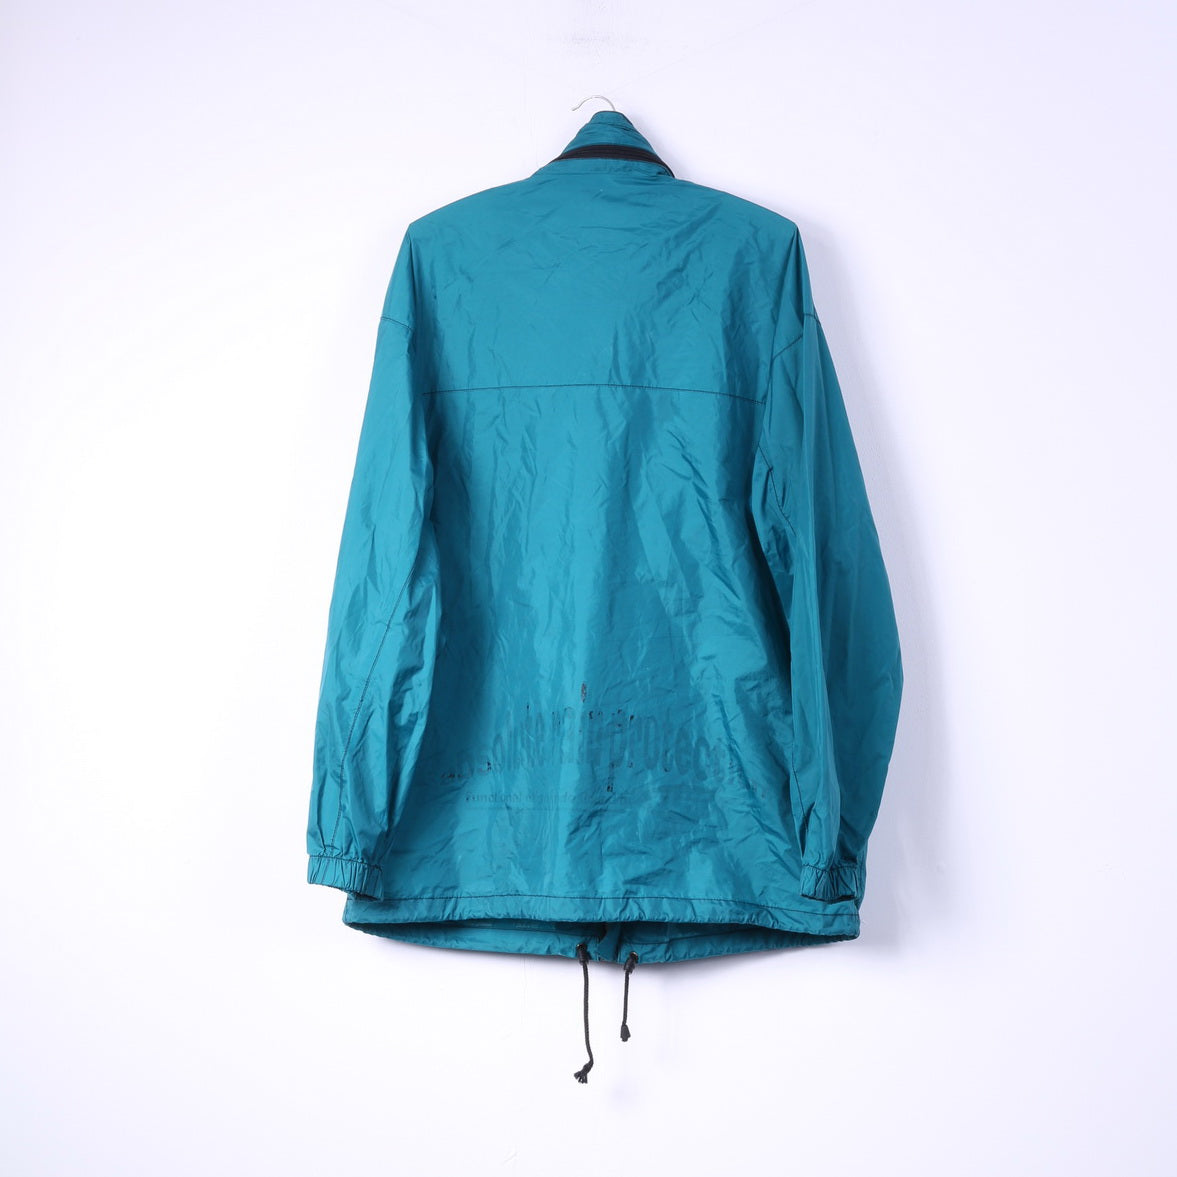 Absolute Rain Protection by Elho Men L Jacket Green Zip Up Vintage 90s Hidden Hood Top